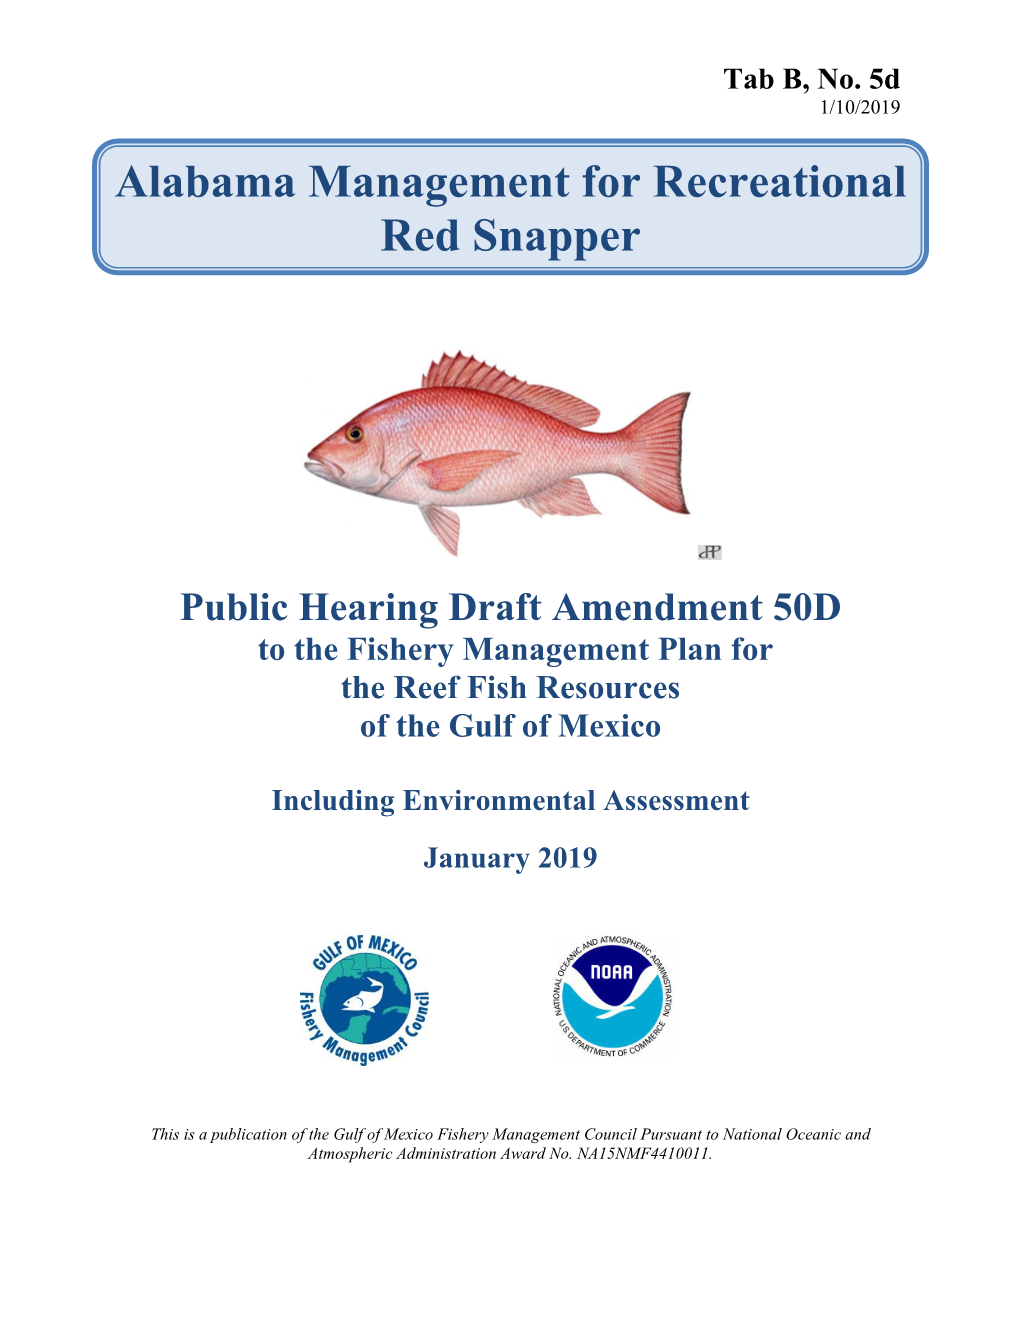 Alabama Management for Recreational Red Snapper